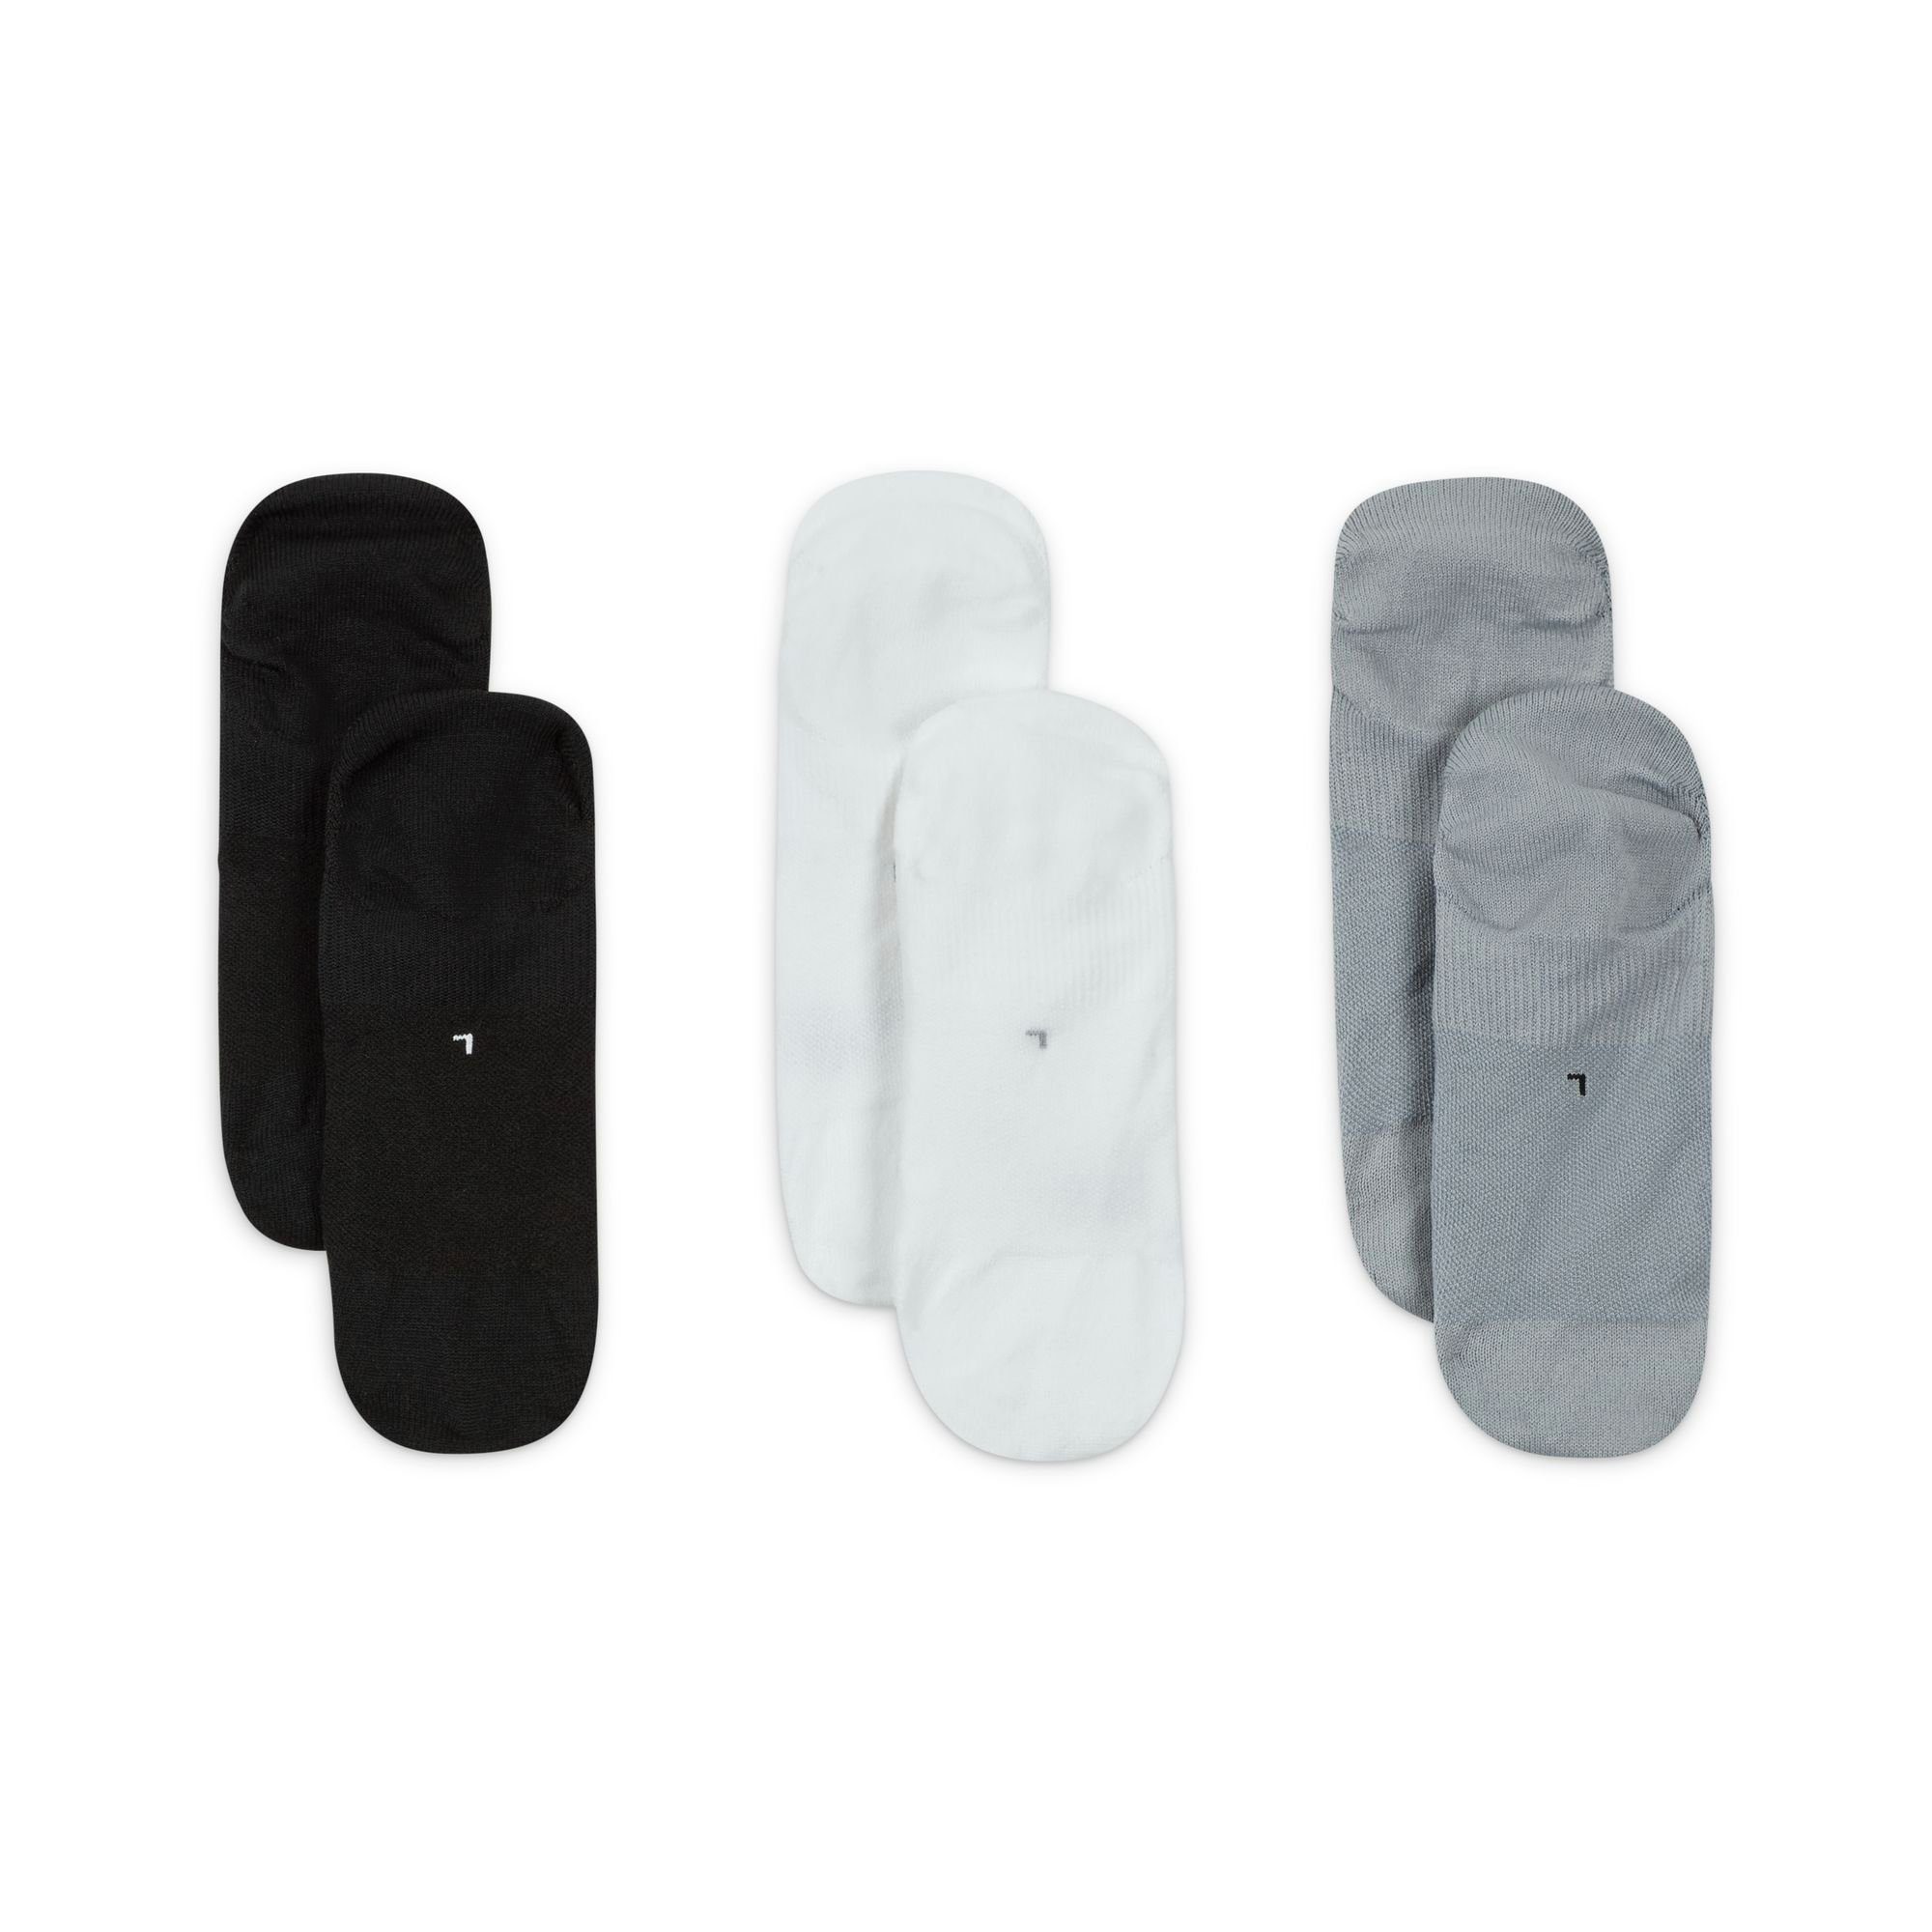 Nike Füßlinge (3-Paar) mit atmungsaktivem 1x 1x 1x weiß Mesh schwarz, grau